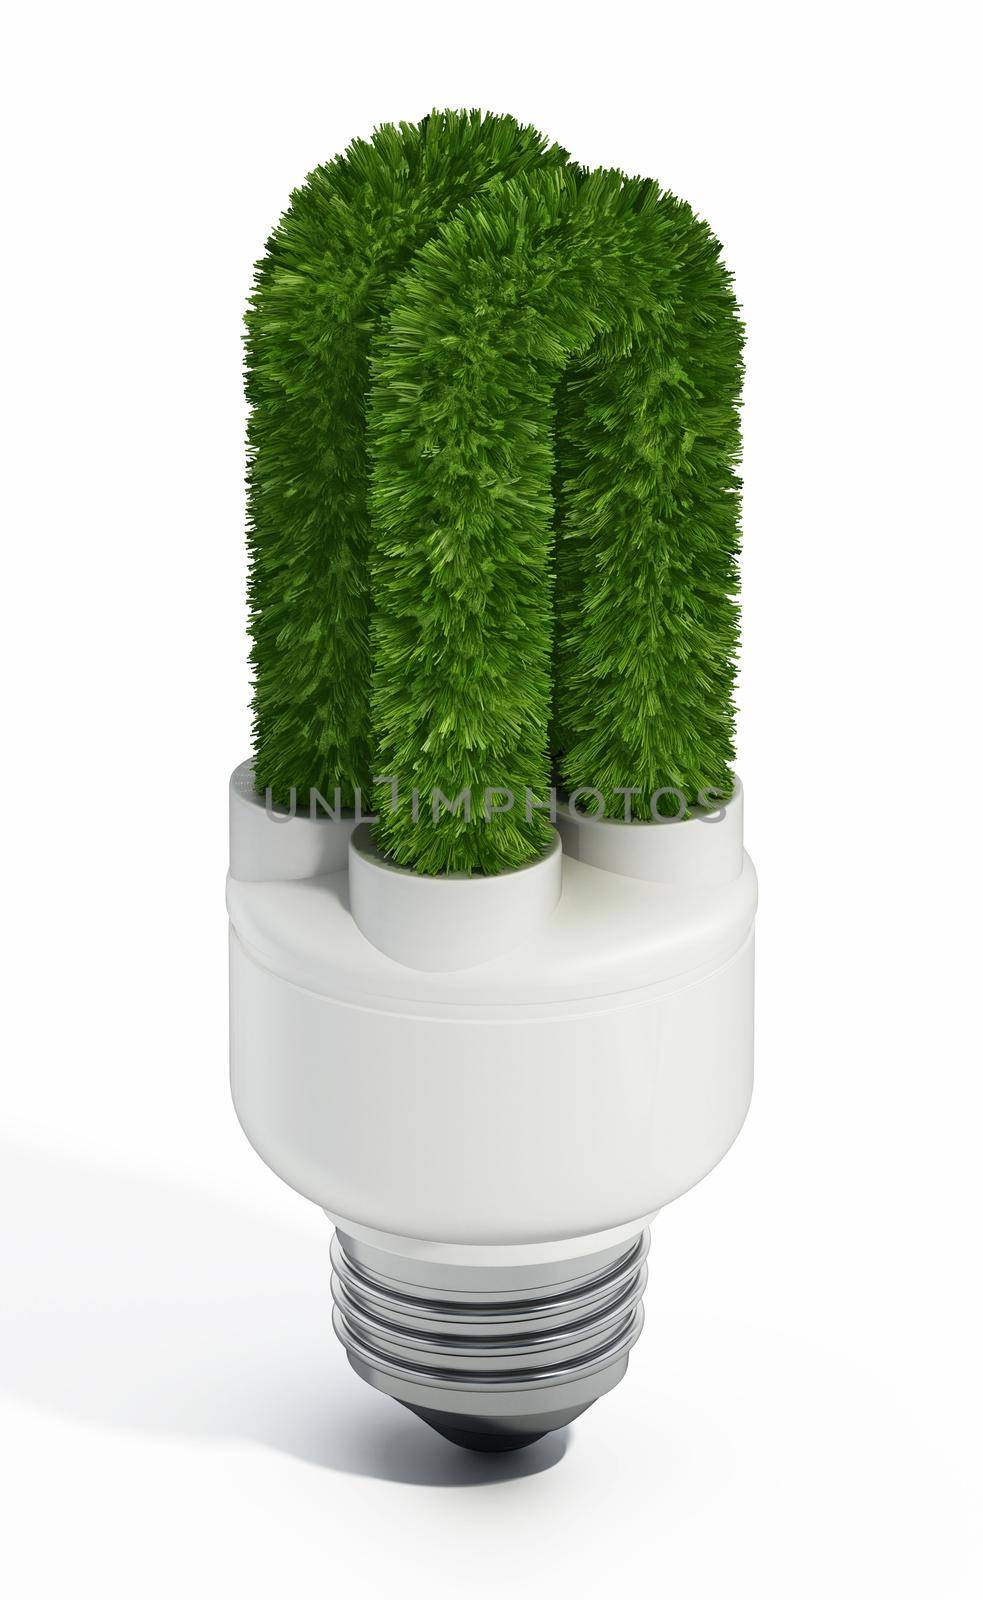 Green fluorescent light bulb isolated on white background. 3D illustration by Simsek